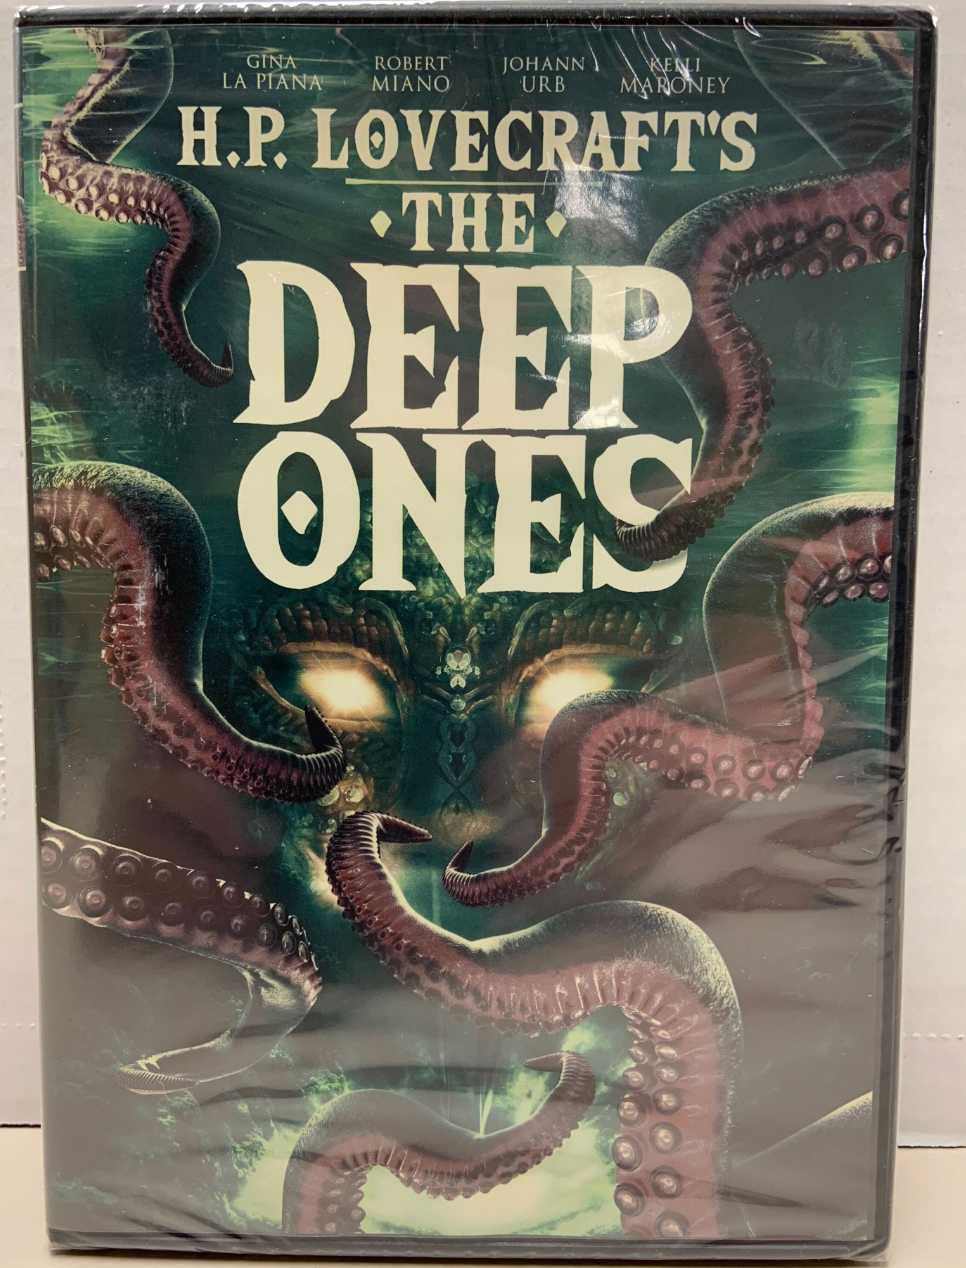 H.P. Lovecraft's The Deep Ones DVD